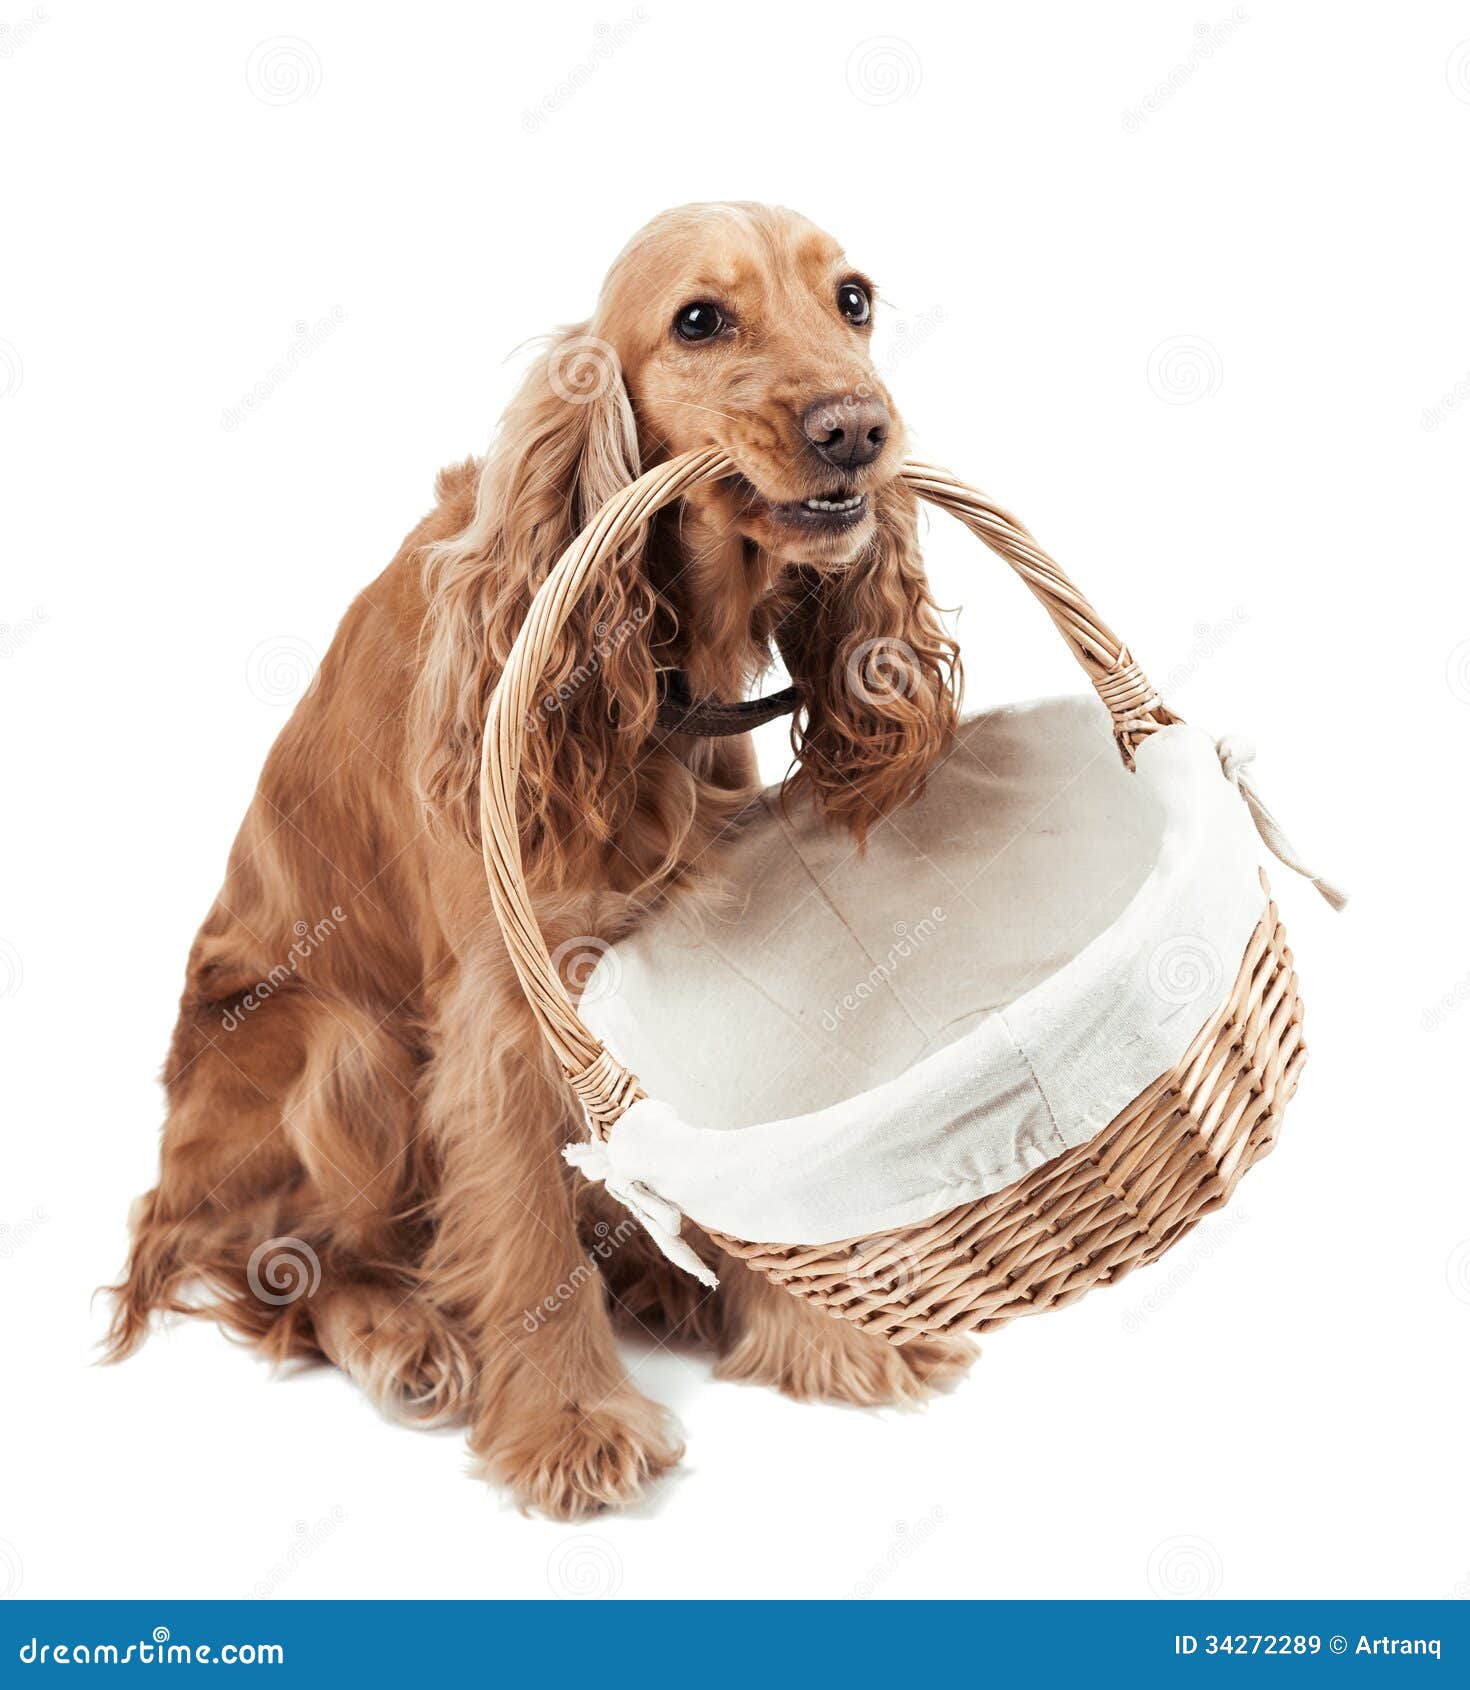 red-dog-holding-basket-isolated-white-34272289.jpg